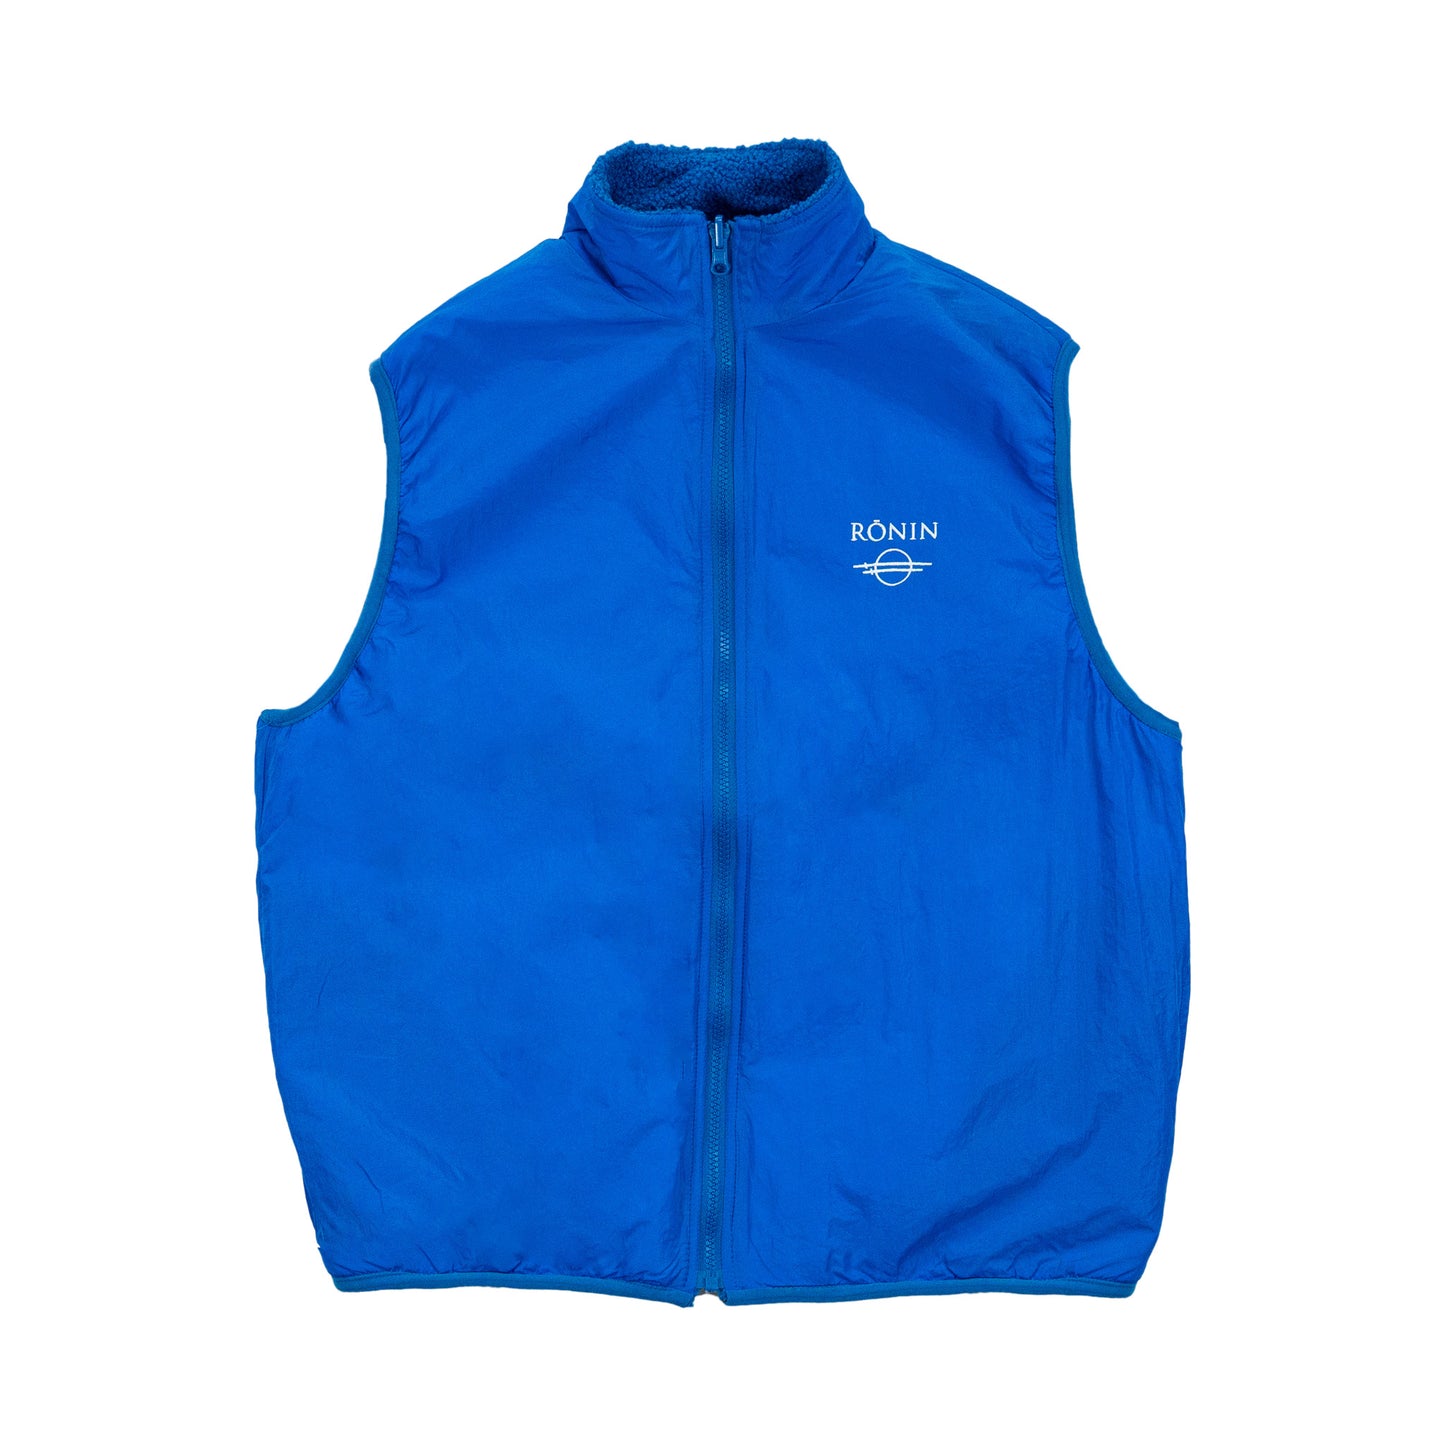 Flower Sherpa Reversible Vest - Blue